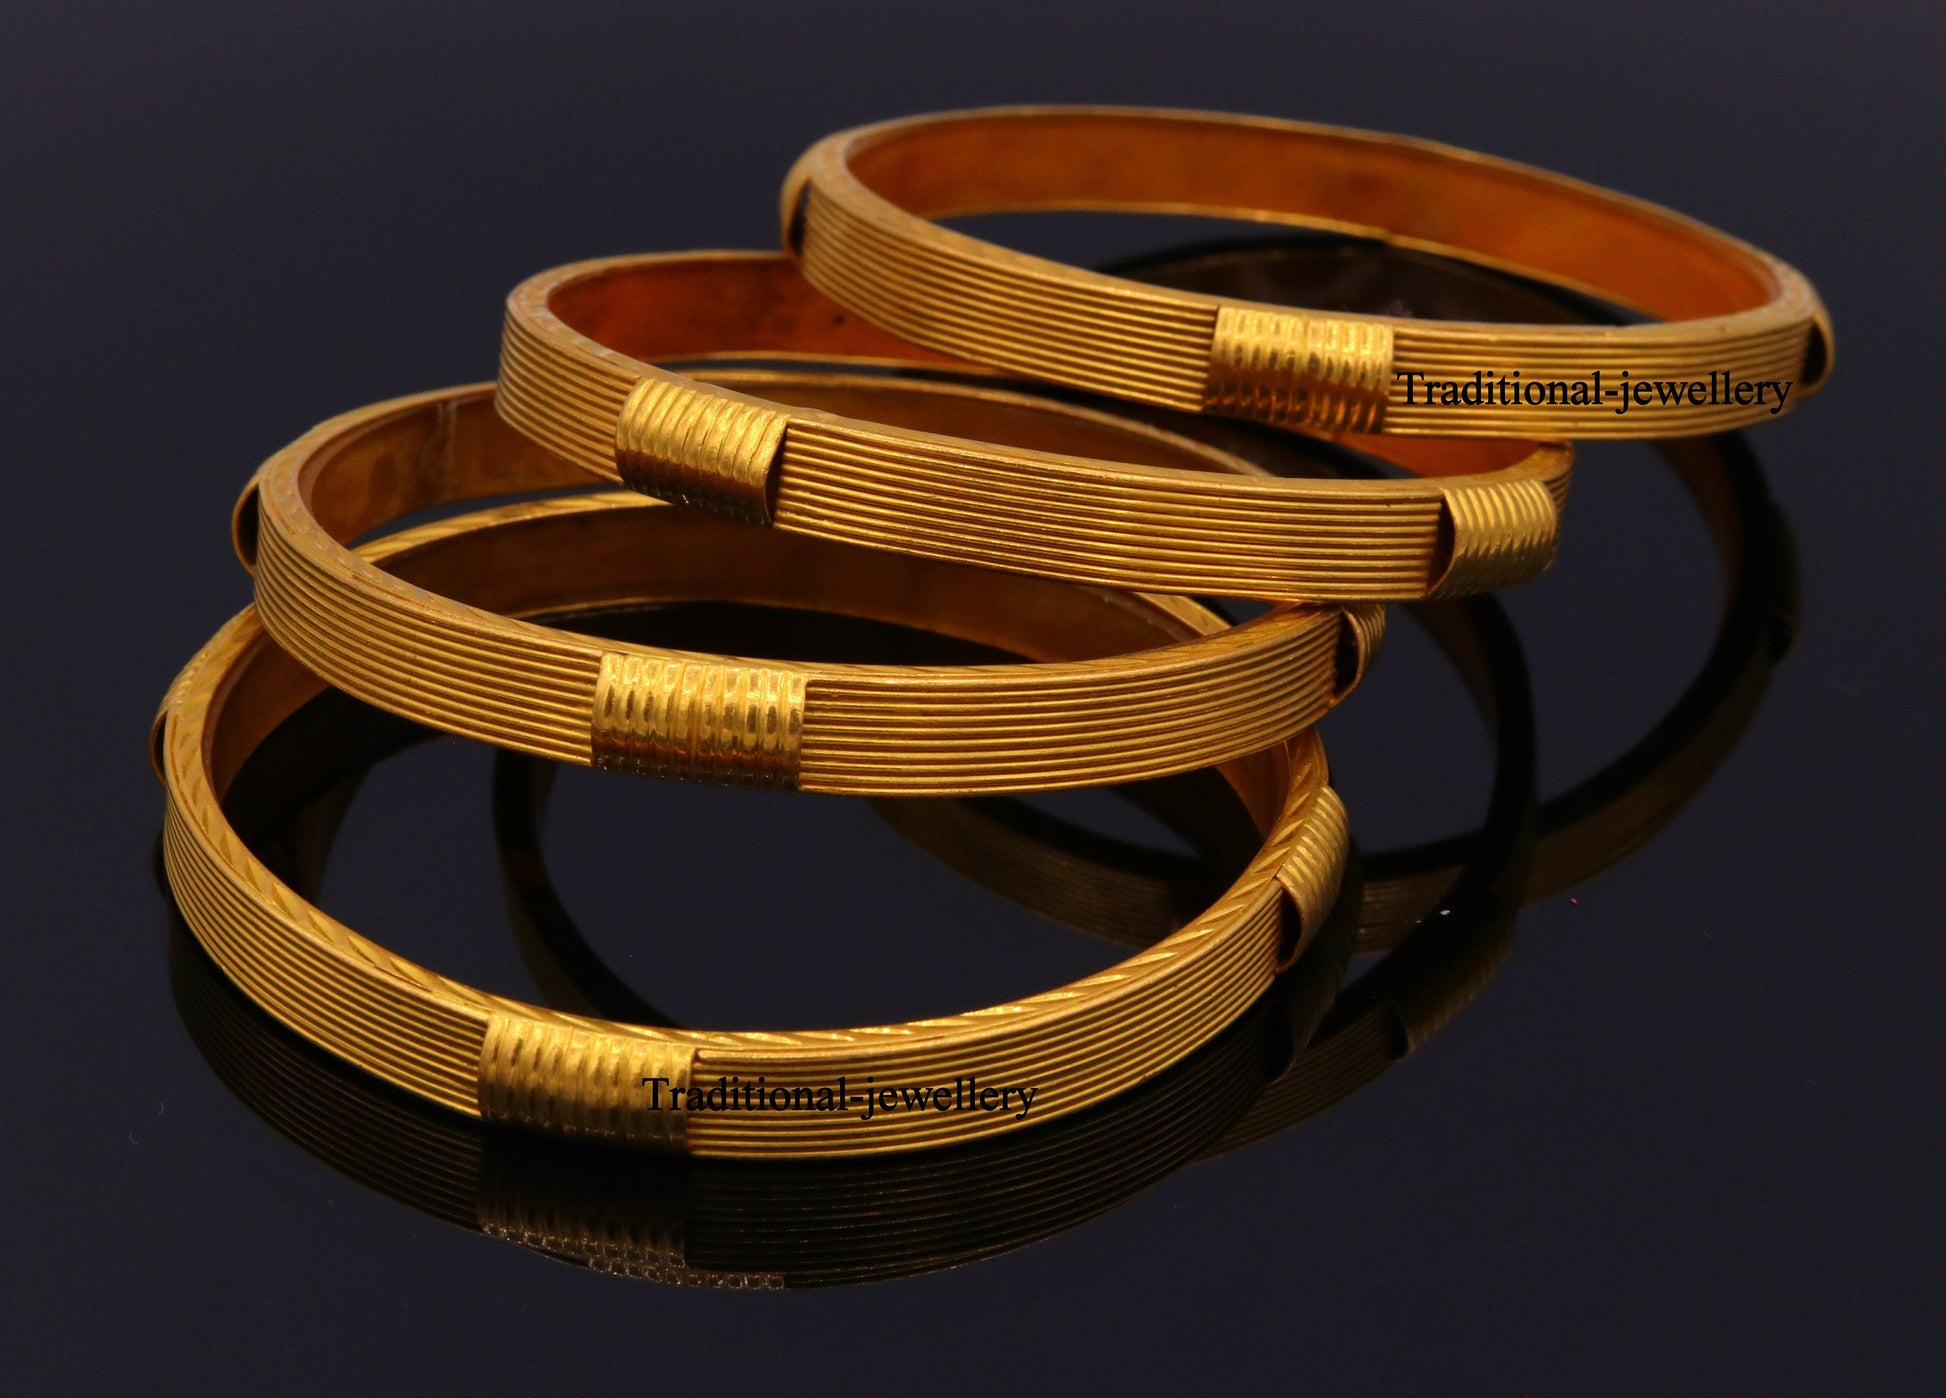 Vintage antique style handmade 22kt yellow gold bangle bracelet women's wedding anniversary jewelry - TRIBAL ORNAMENTS